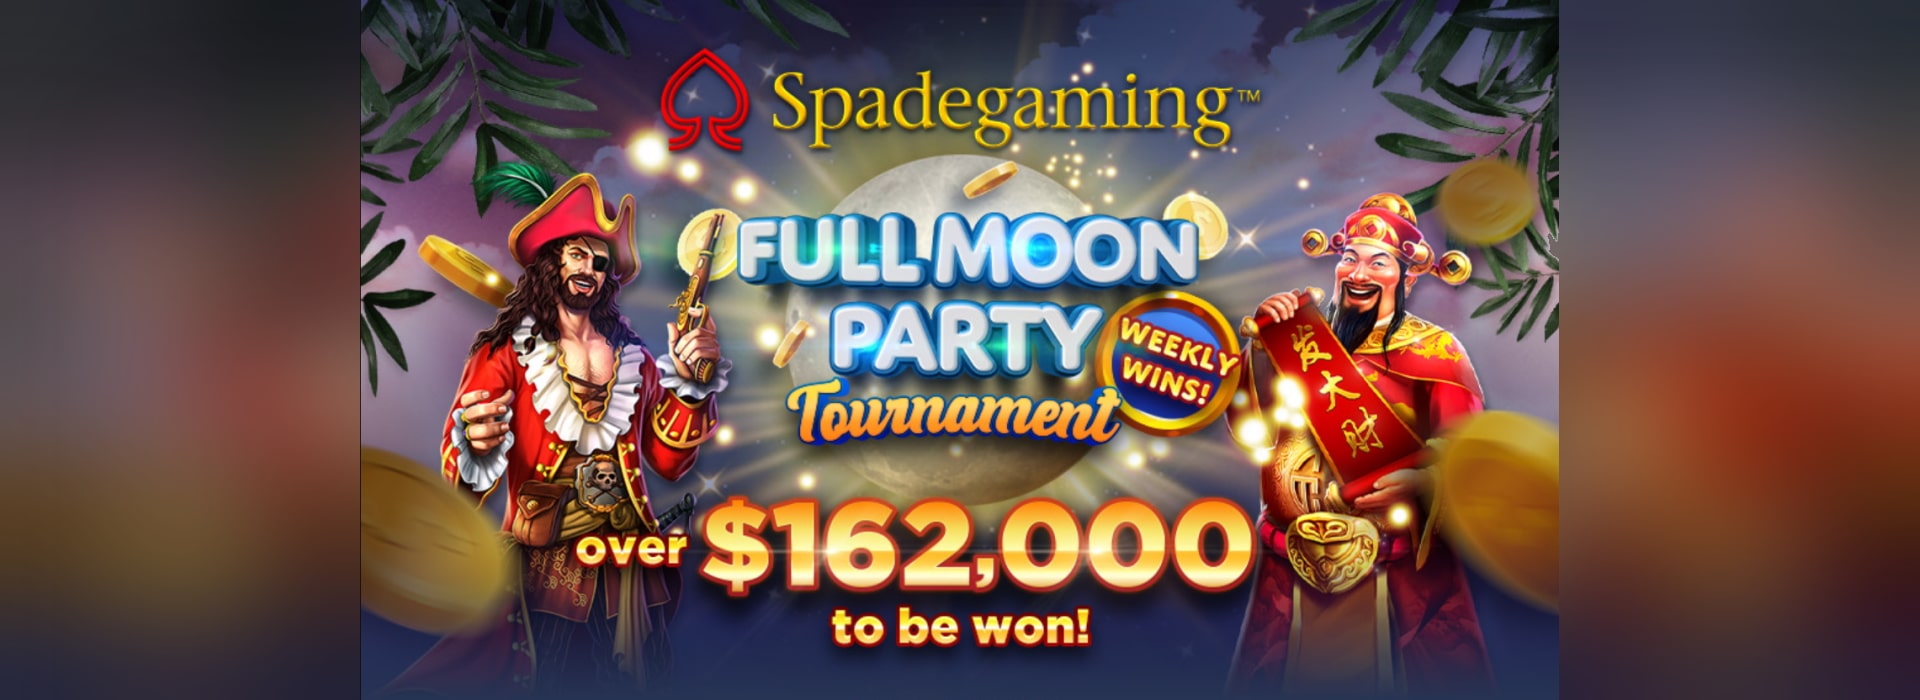 Spadegaming Fullmoon Party Tournament